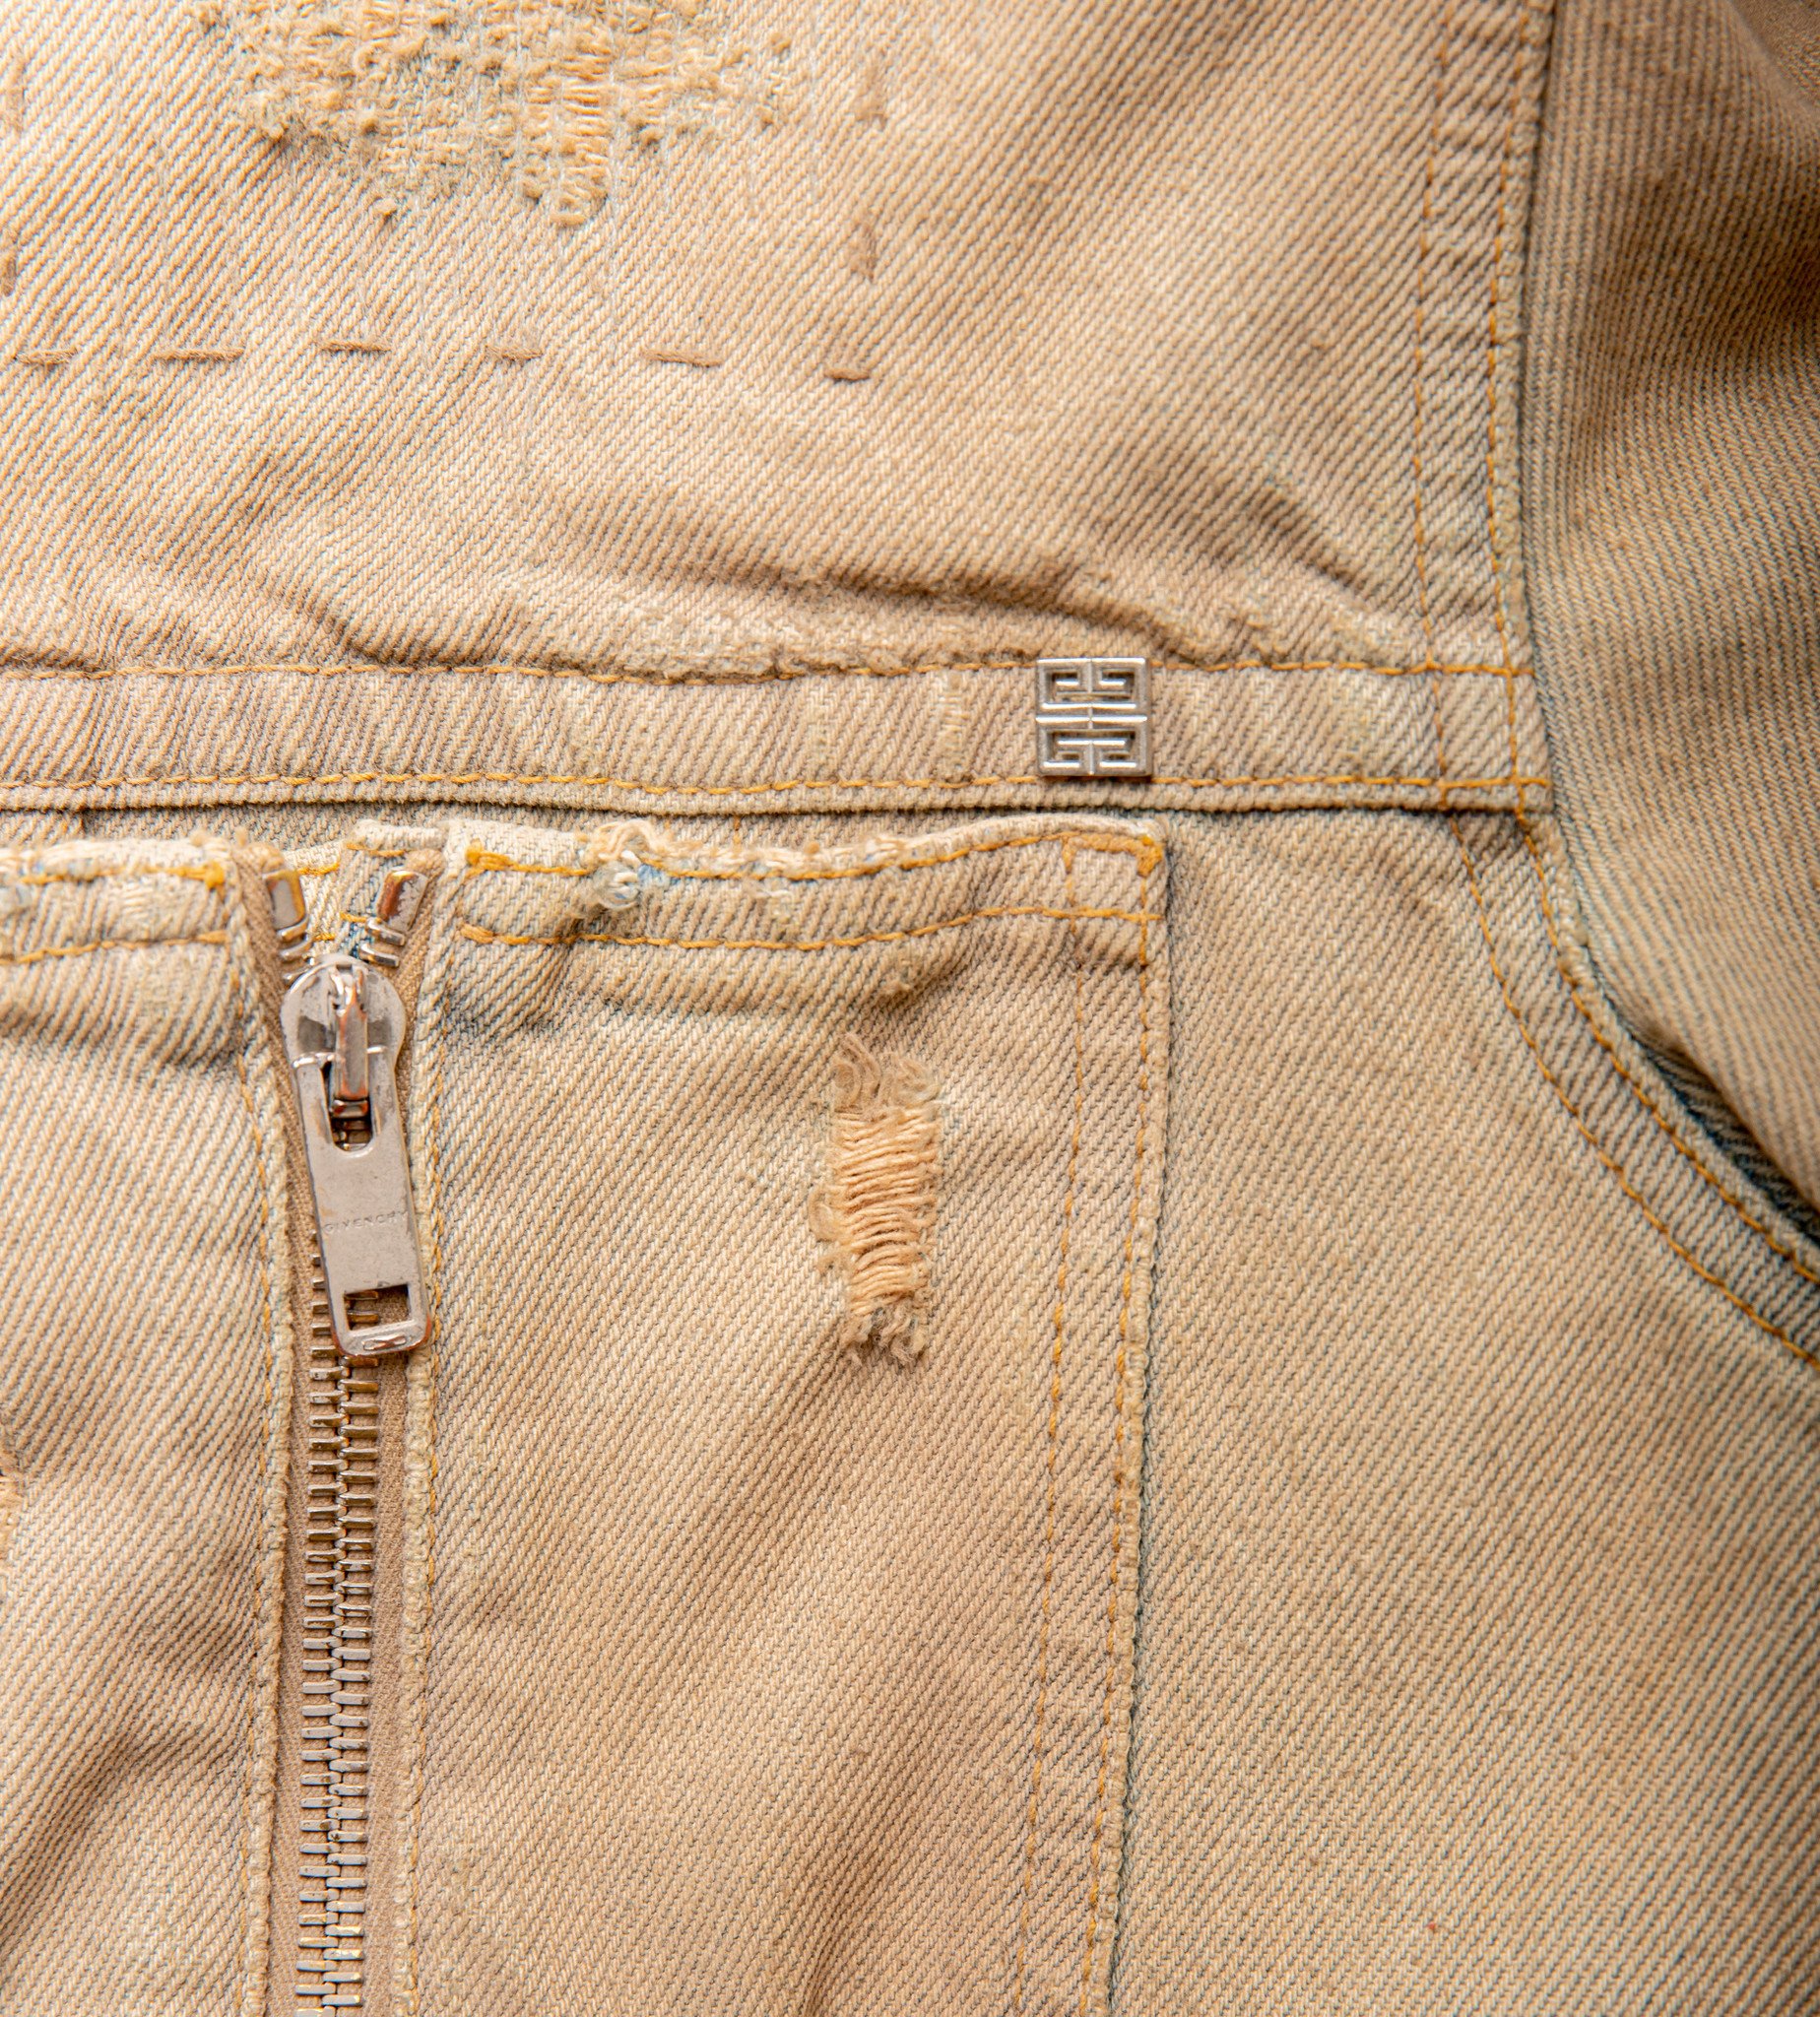 GIVENCHY Distressed Denim Jeans Beige